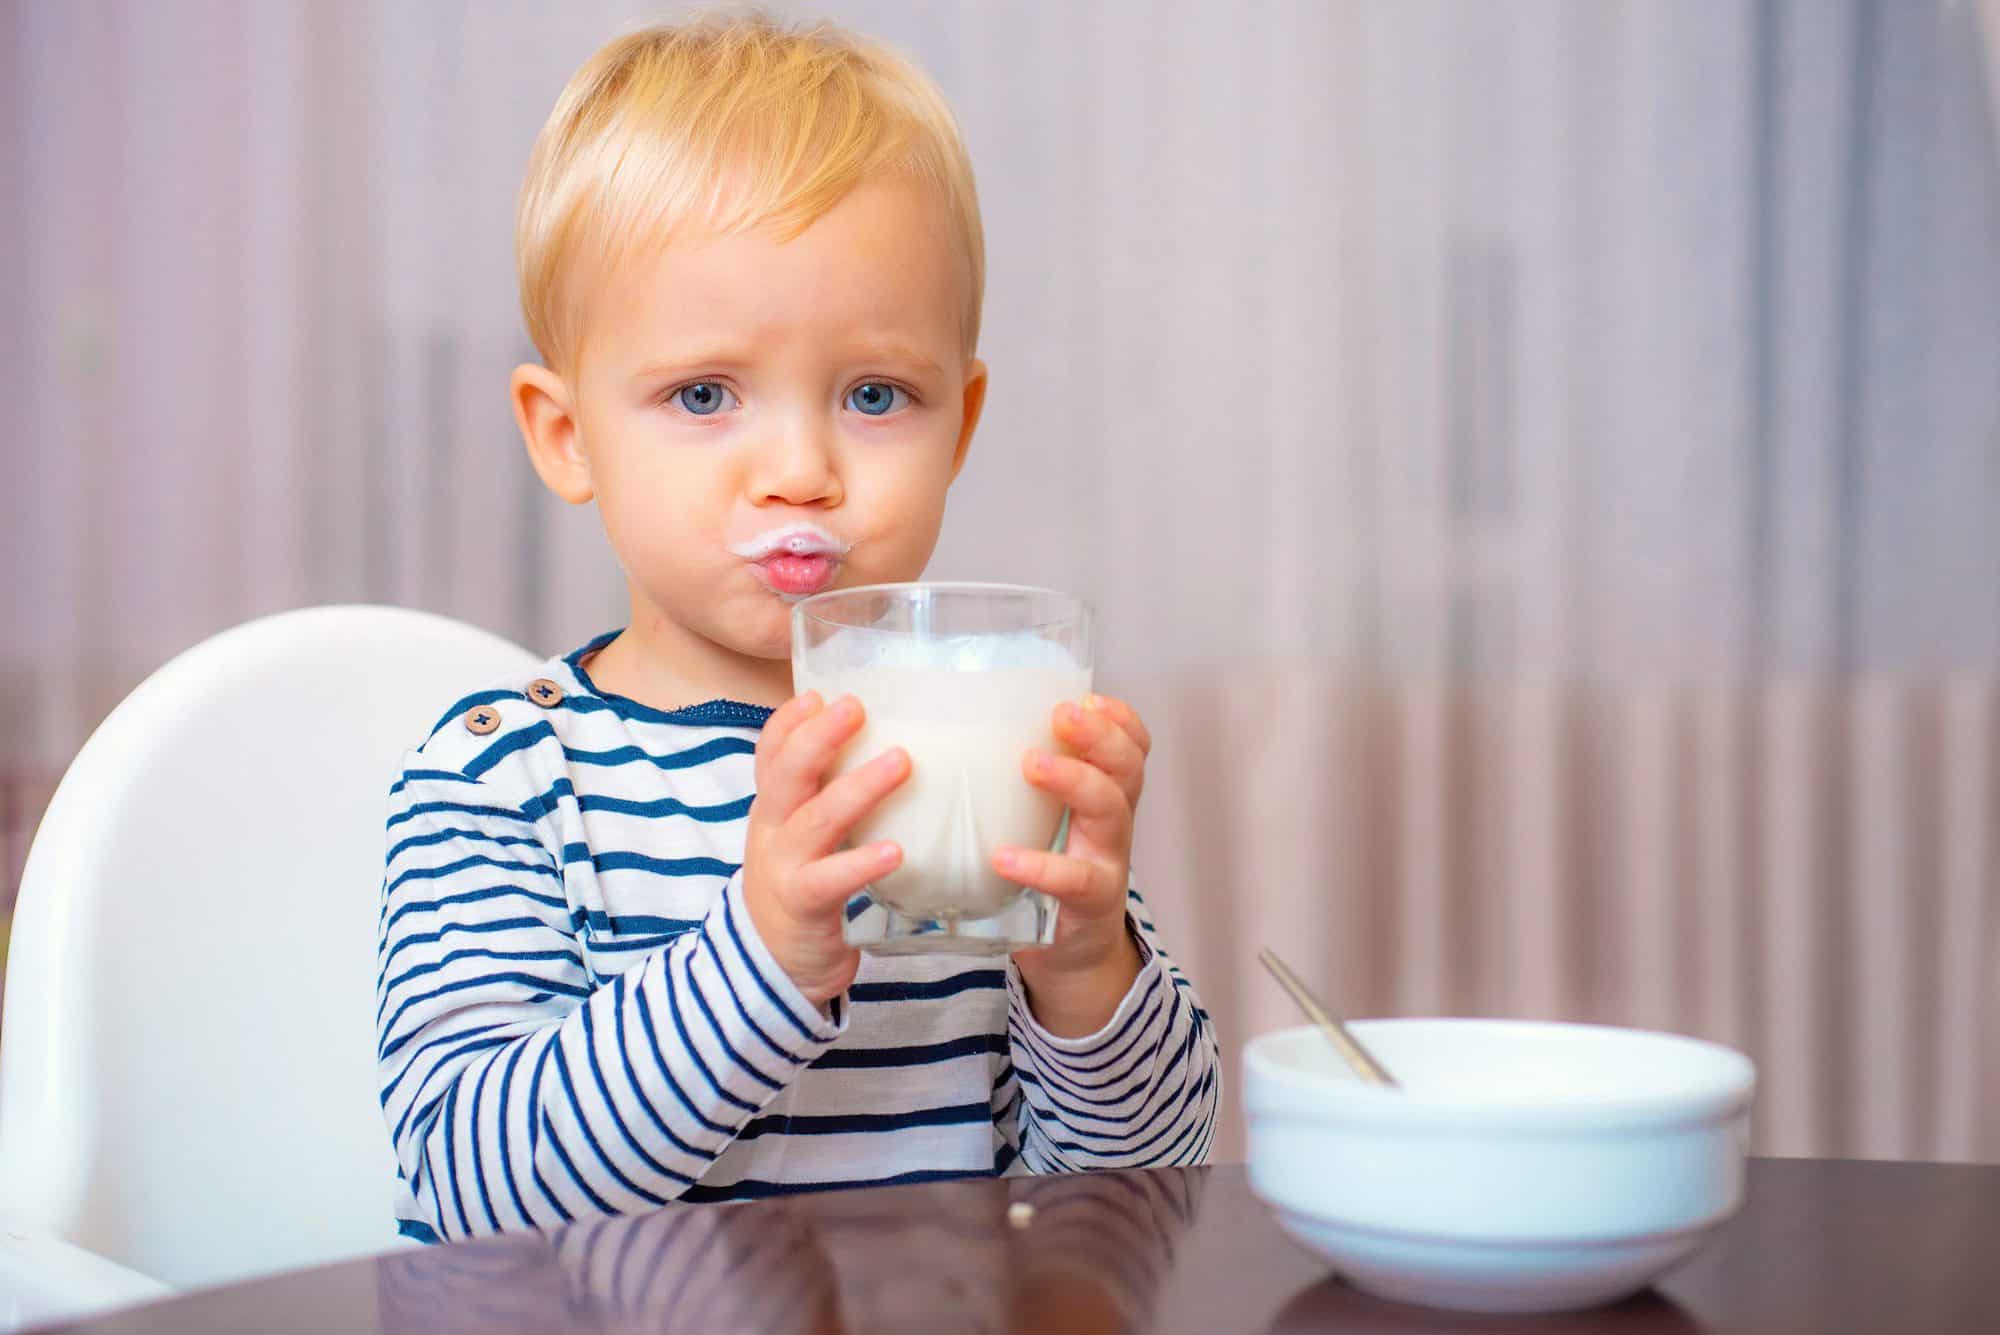 Empleado Maquinilla de afeitar Momento Alimentación a partir de los 12 meses: ¿Cuándo le damos la leche? - CSC